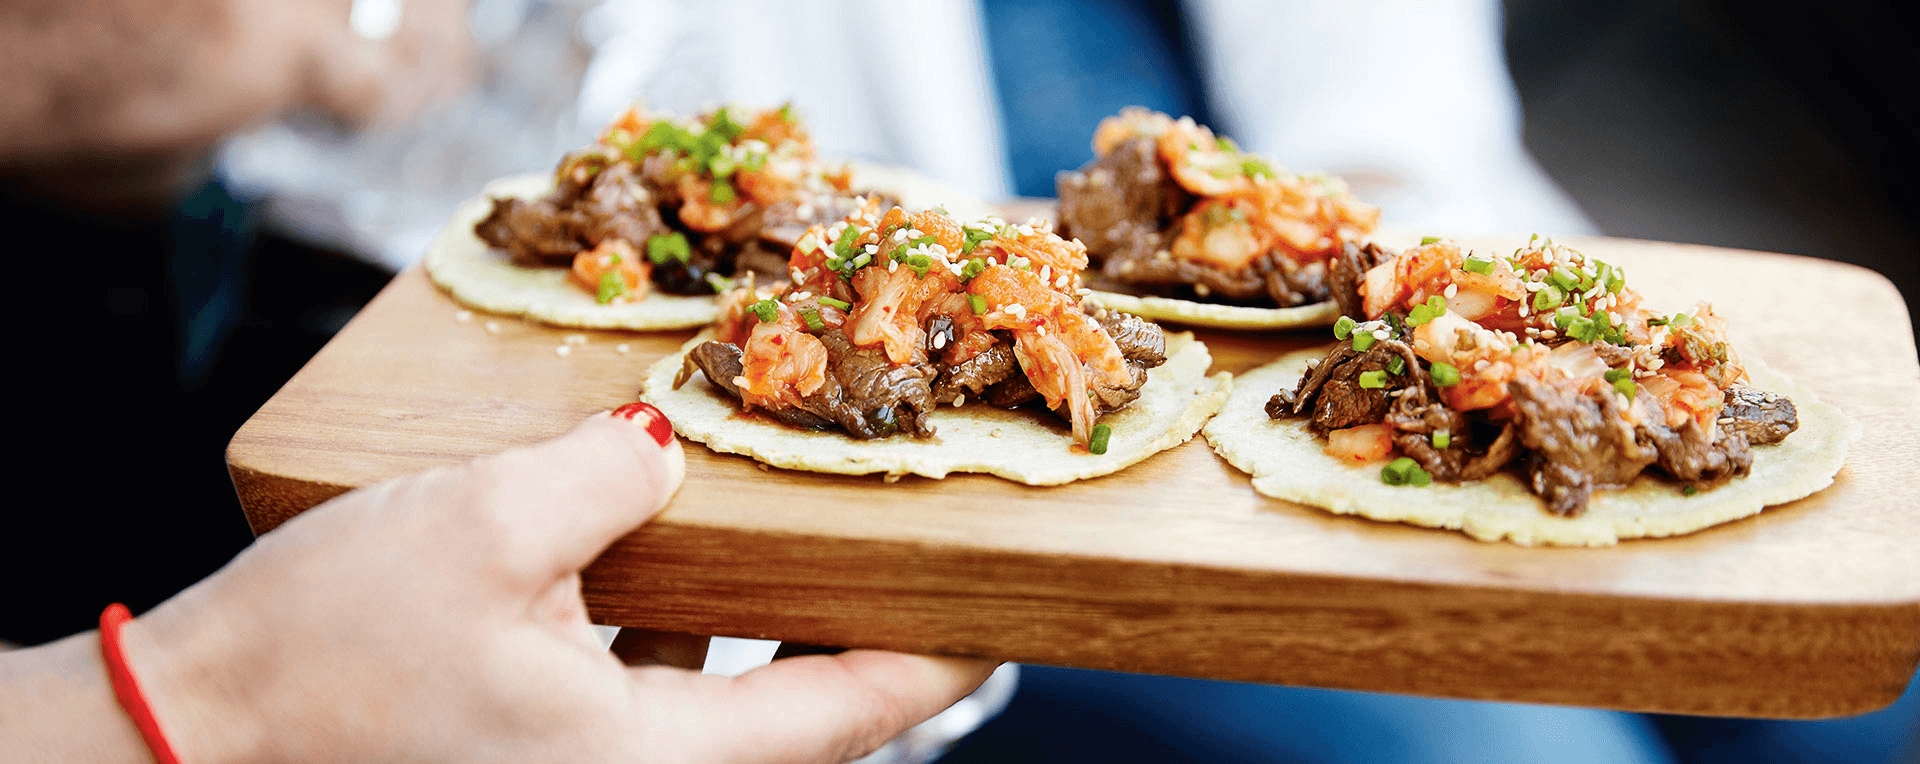 Caiko-Tacos mit koreanischem Bulgogi